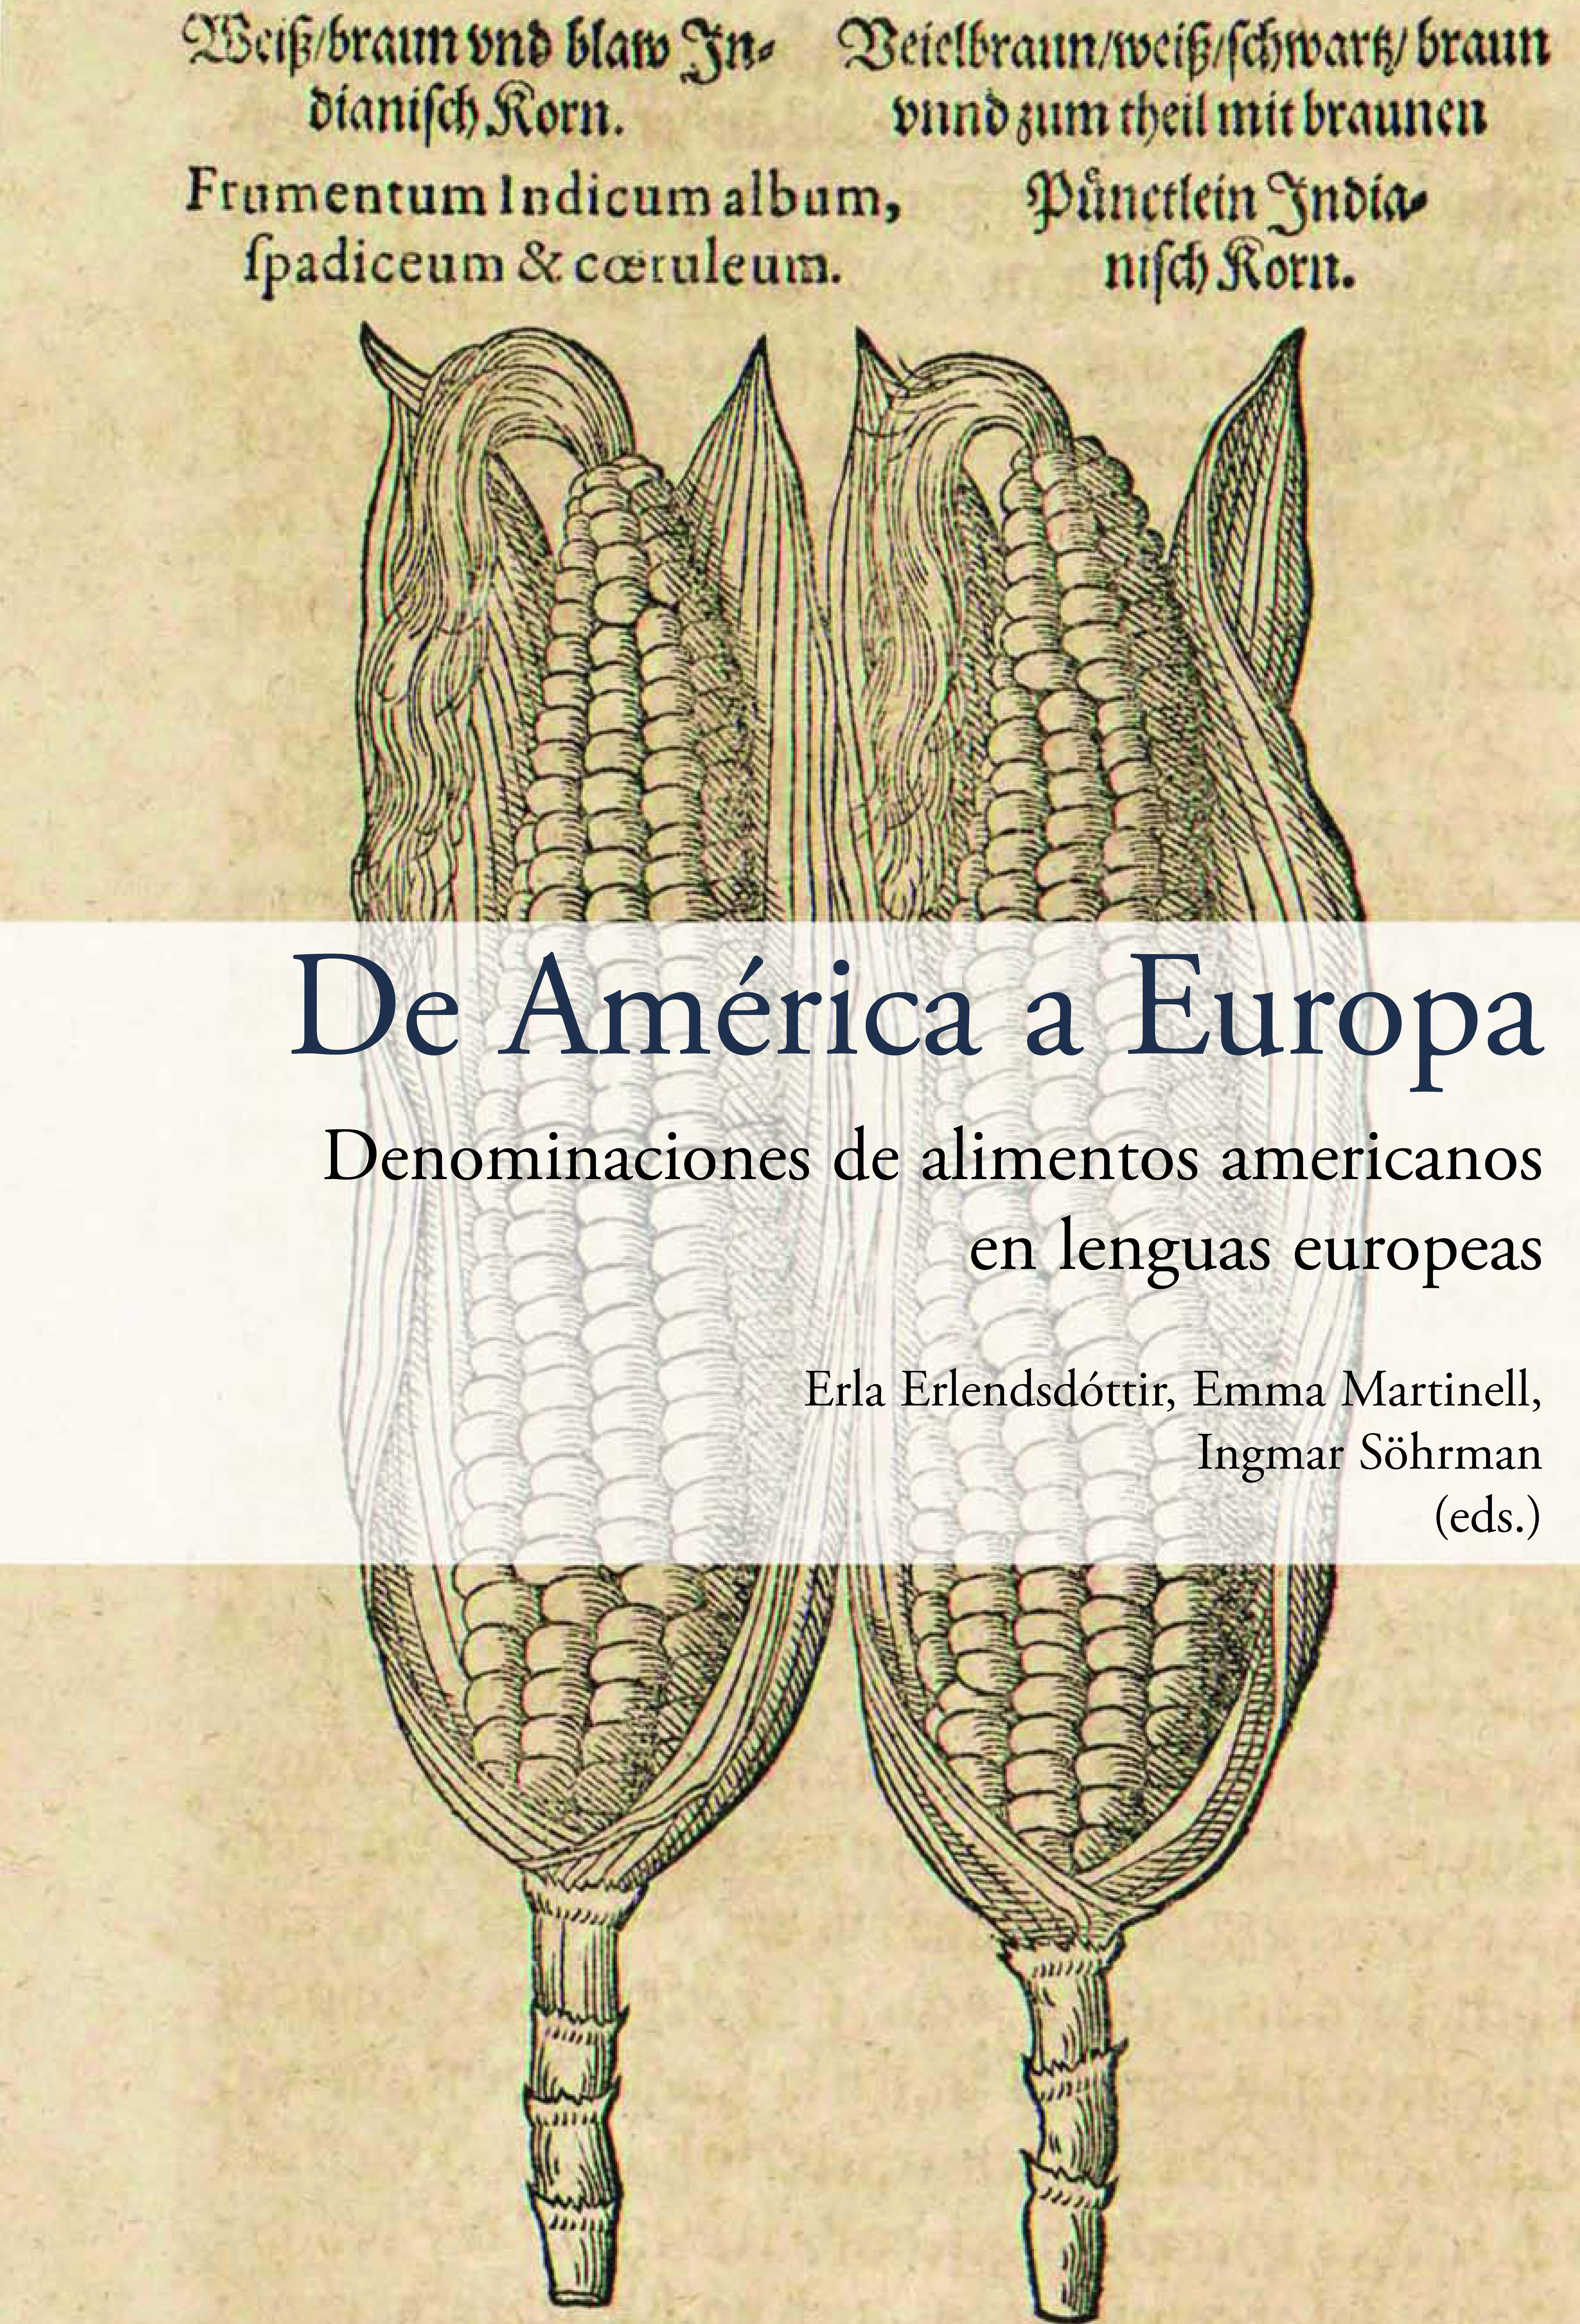 De América a Europa "Denominaciones de alimentos americanos en lenguas europeas". 